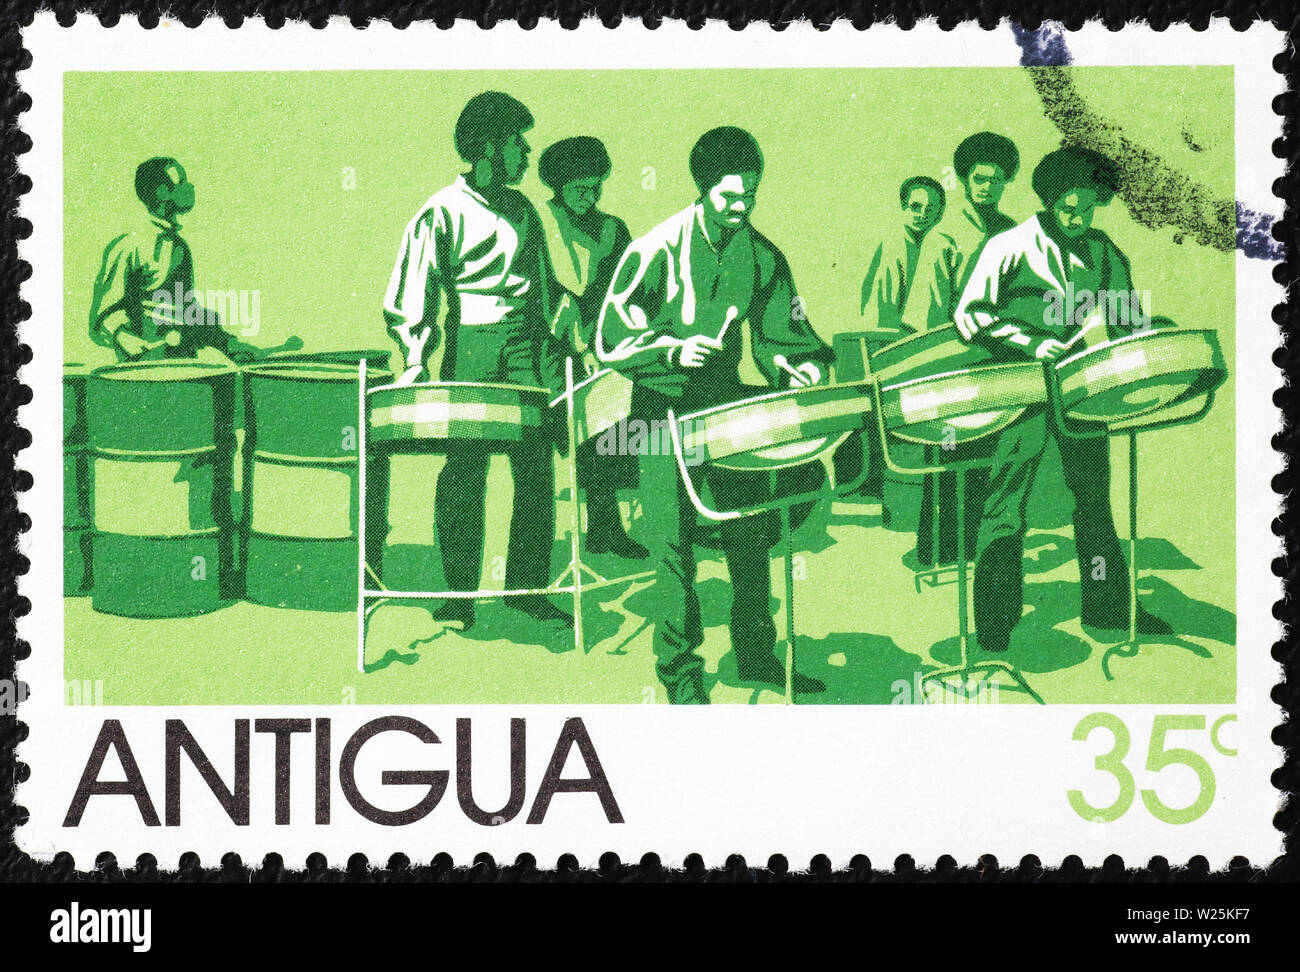 Steel drum band on antiguan postage stamp Stock Photo